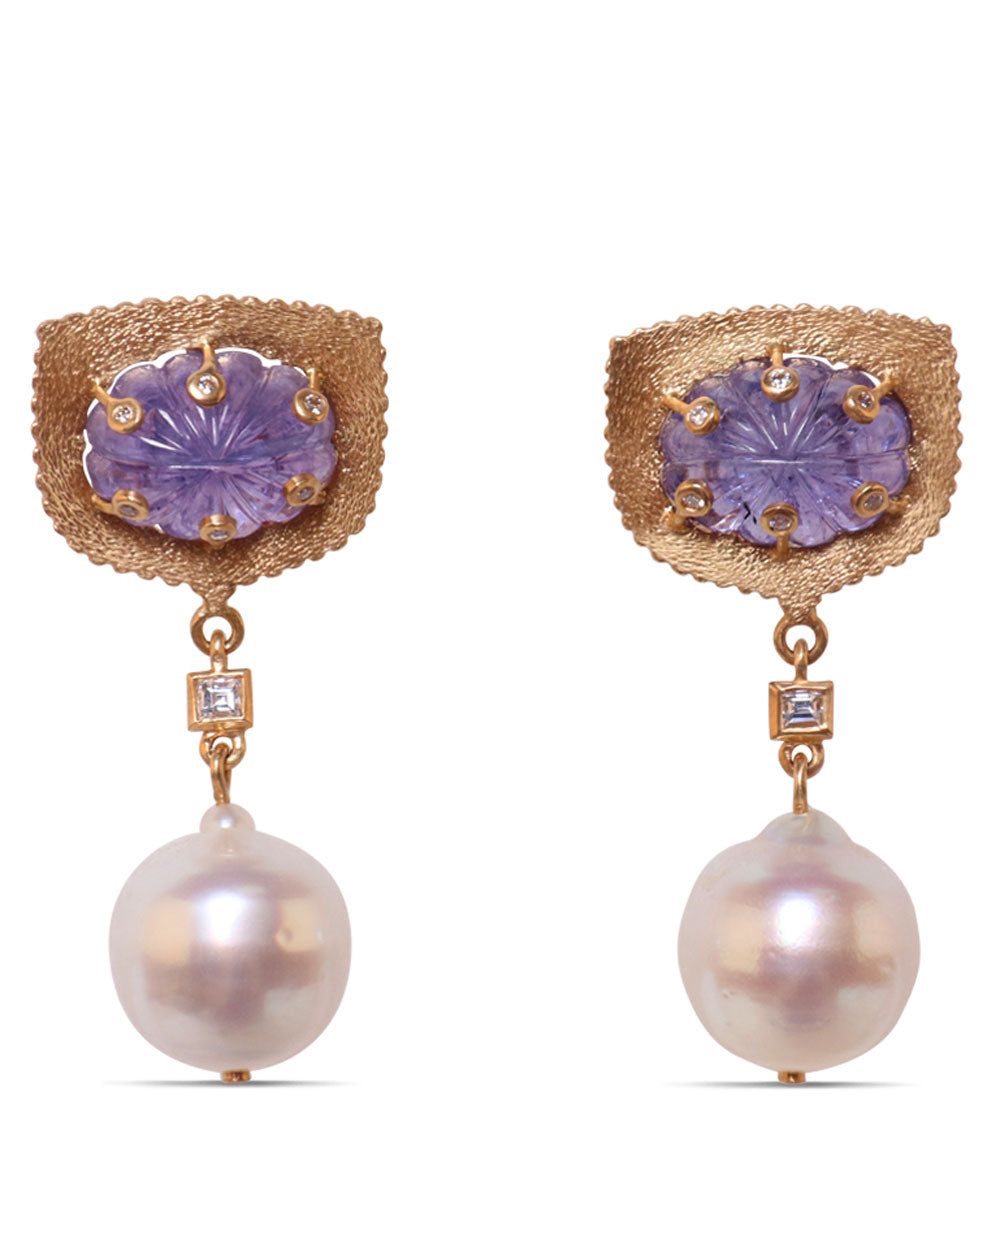 Tanzanite and Pearl Earrings